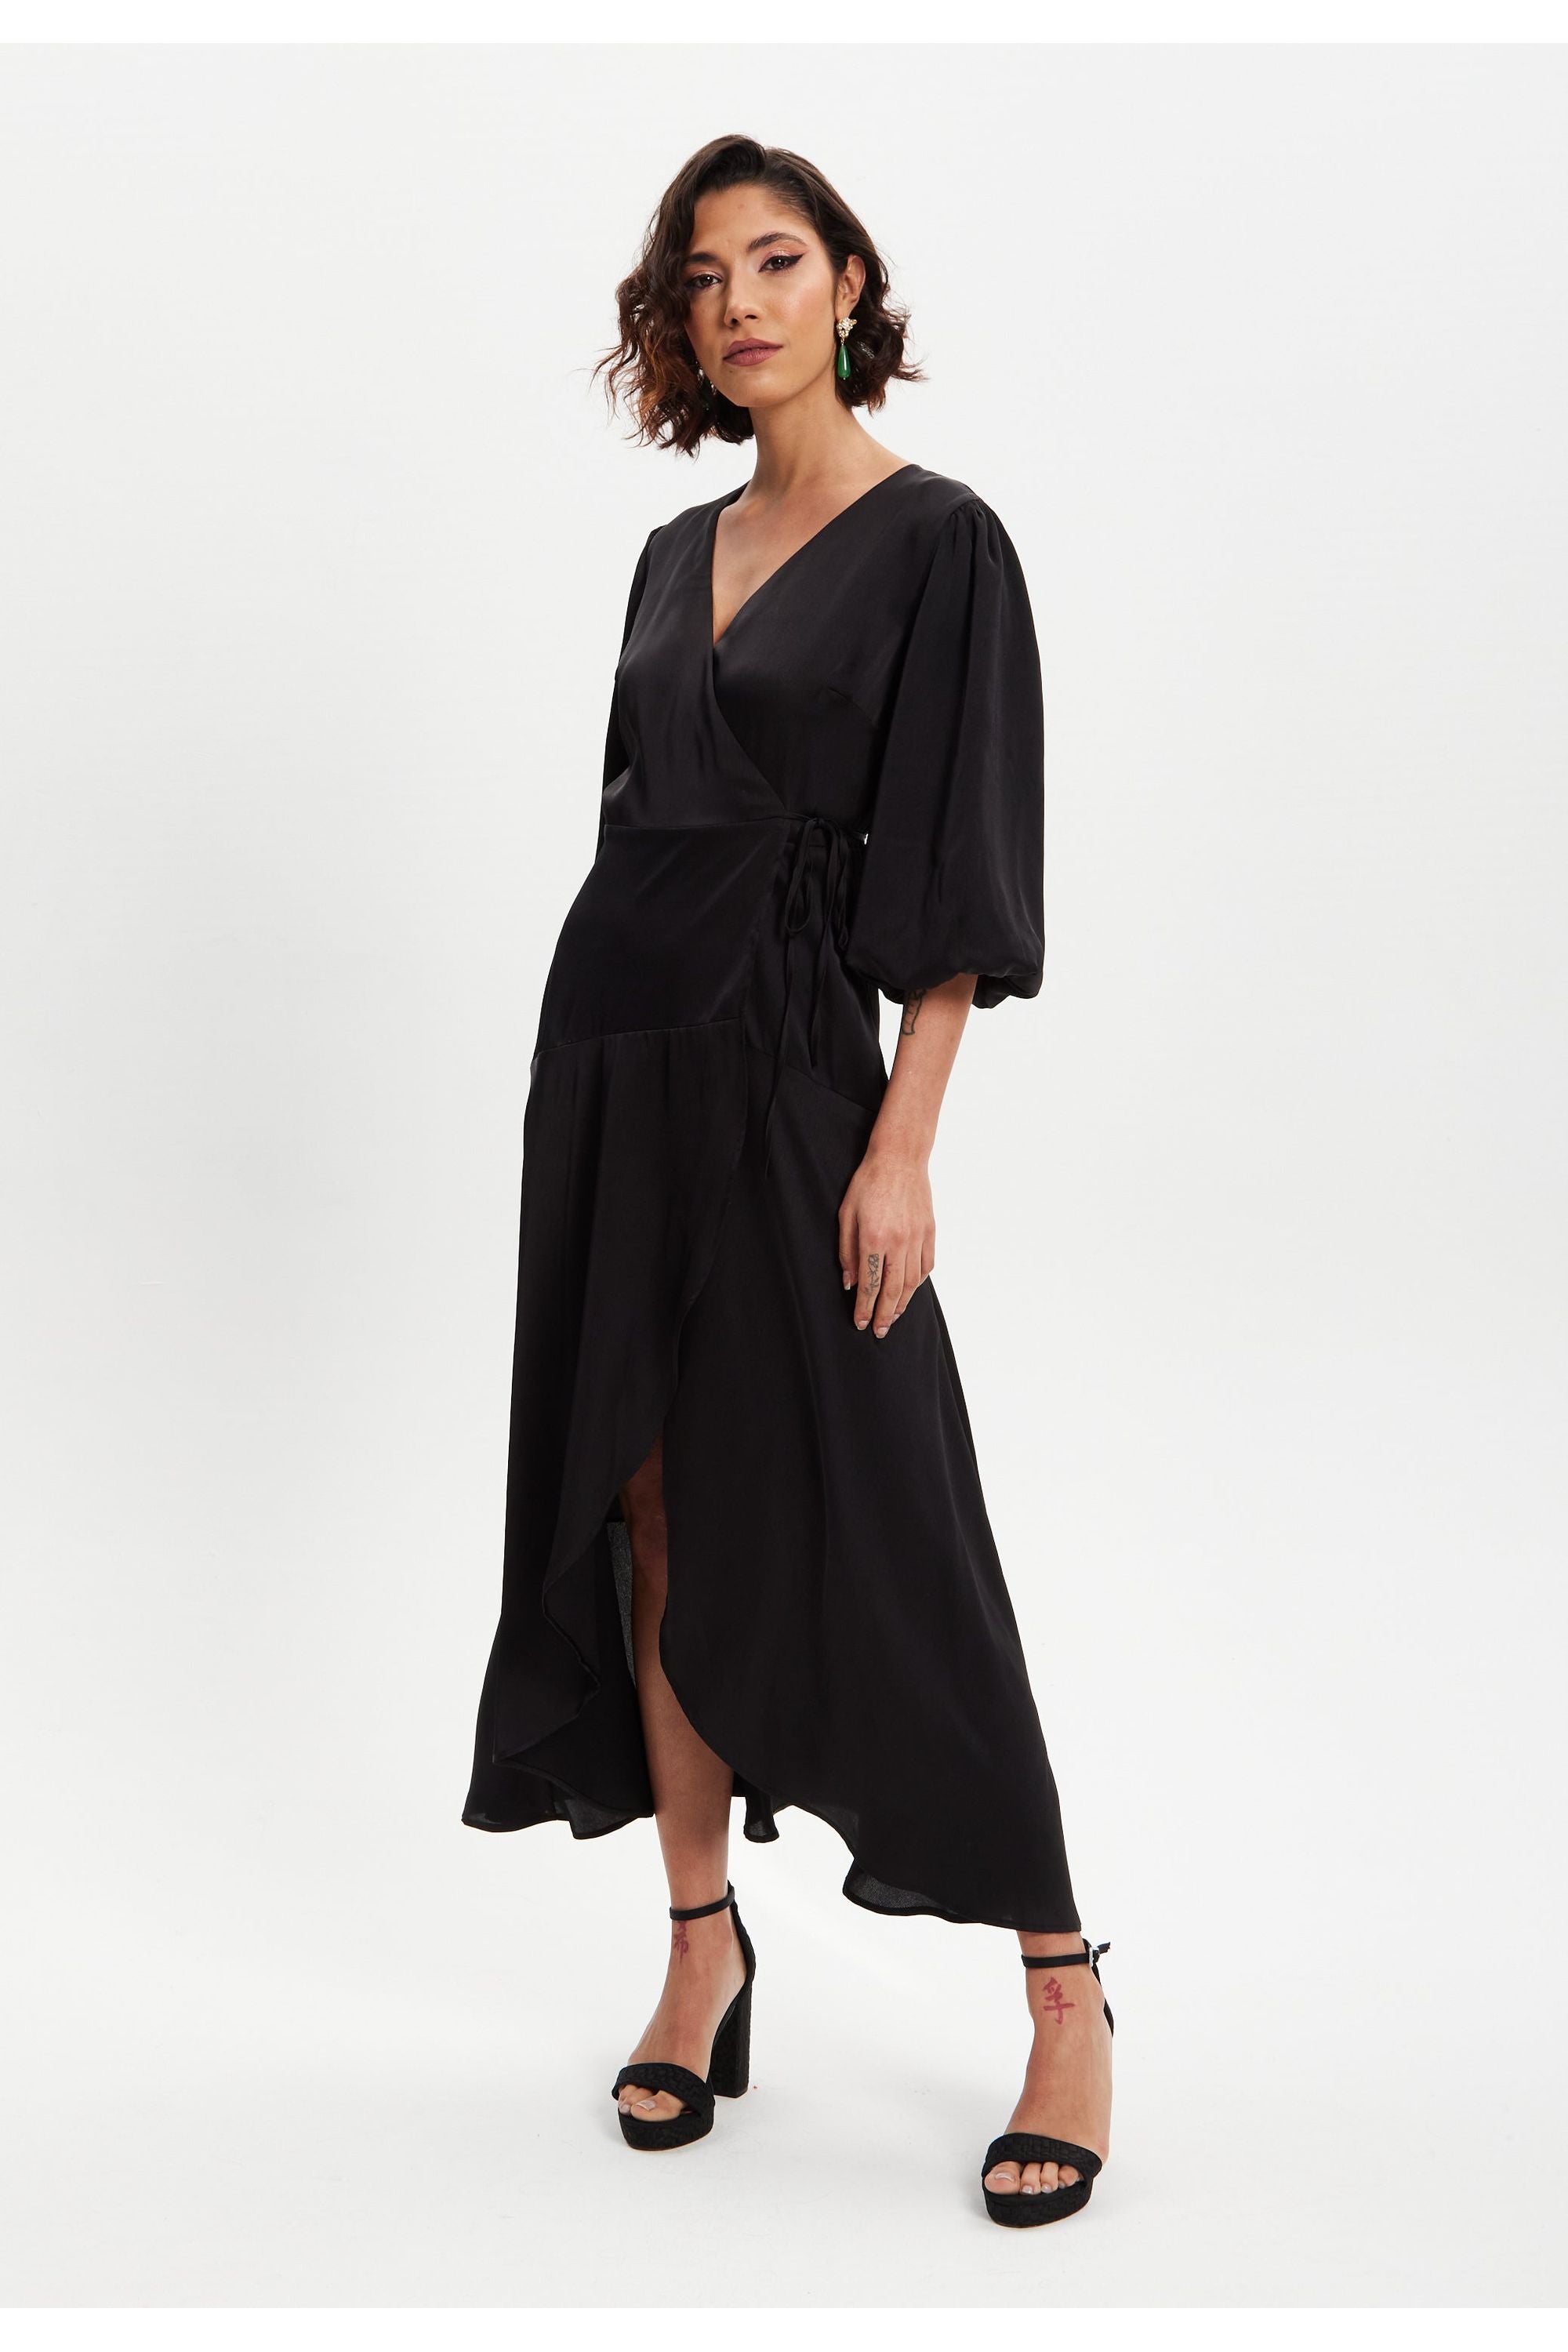 Black Midi Wrap Dress With Short Puff Sleeves LIQ20-128Black